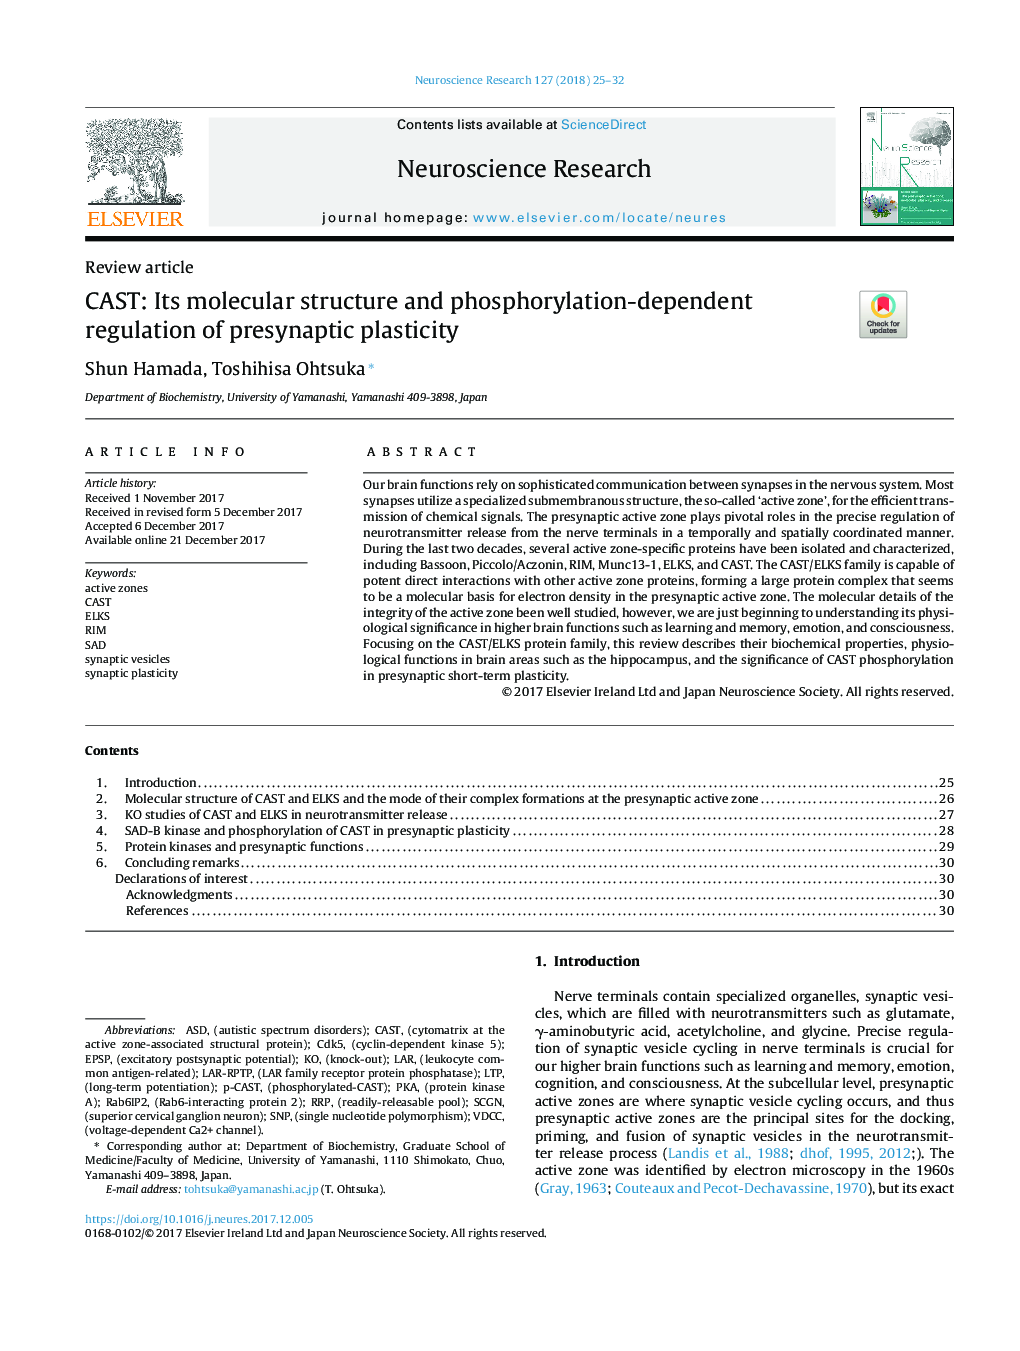 CAST: Its molecular structure and phosphorylation-dependent regulation of presynaptic plasticity